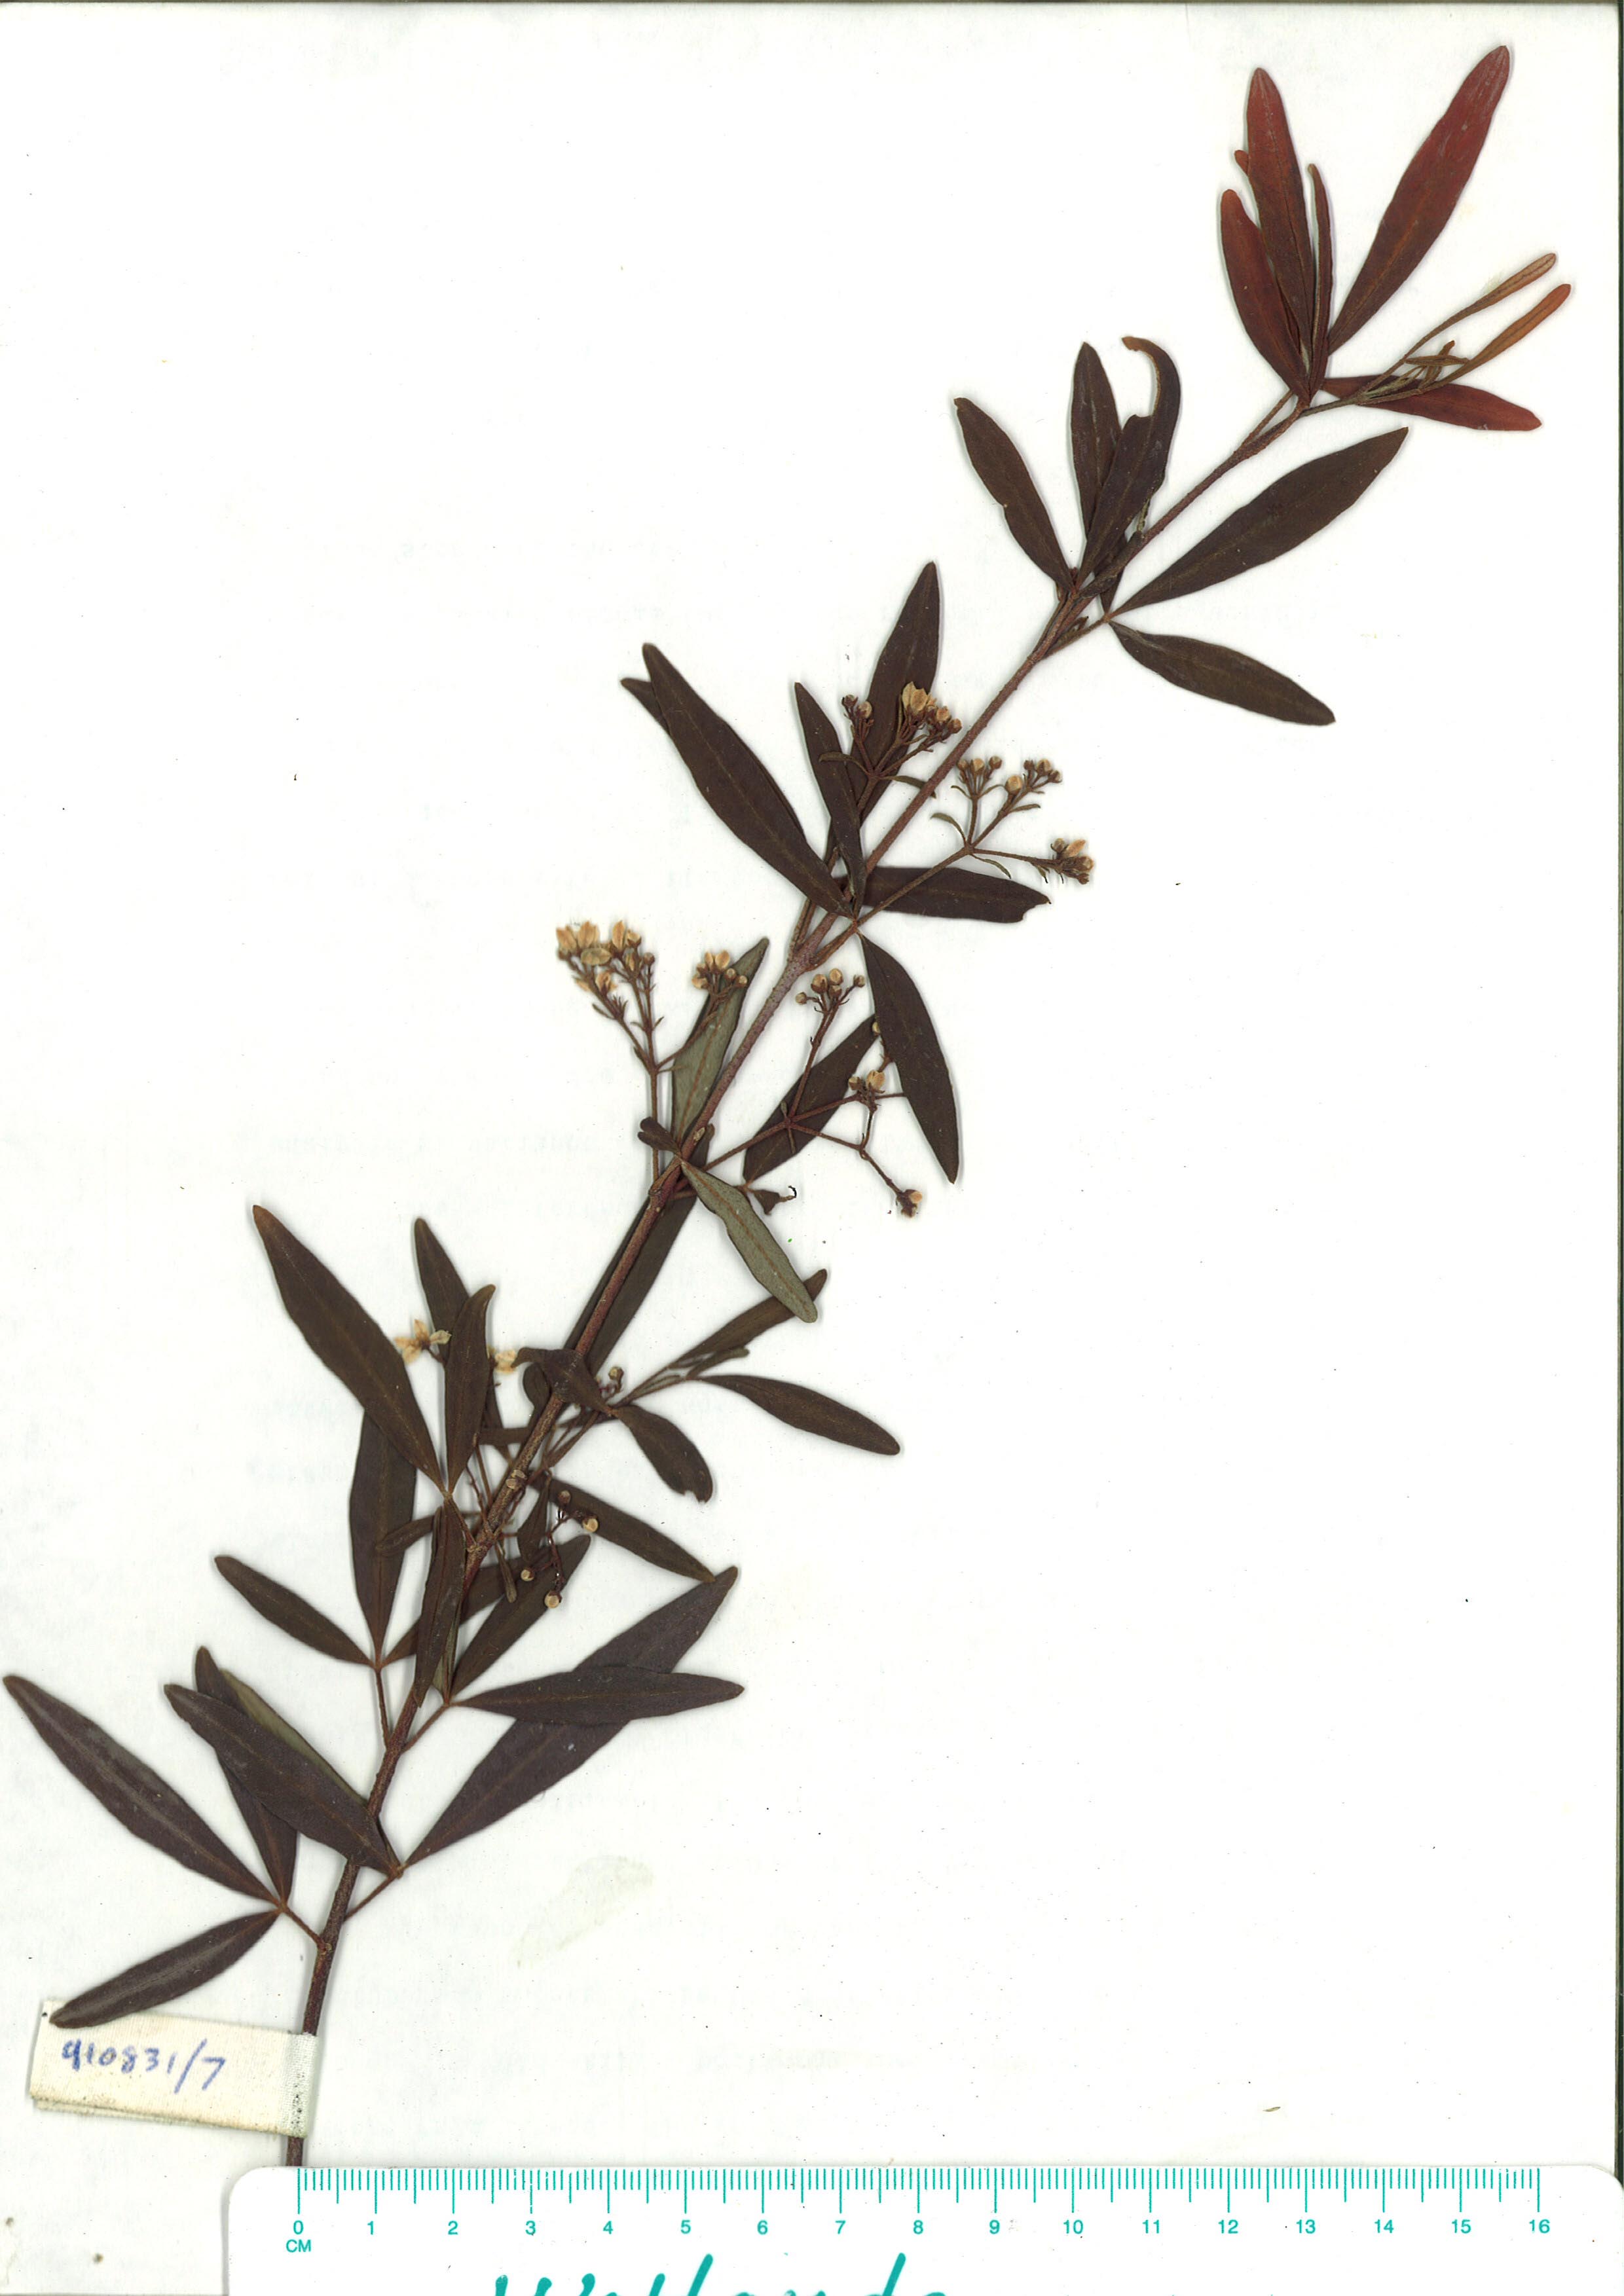 Scanned herbarium image of Zieria smithii